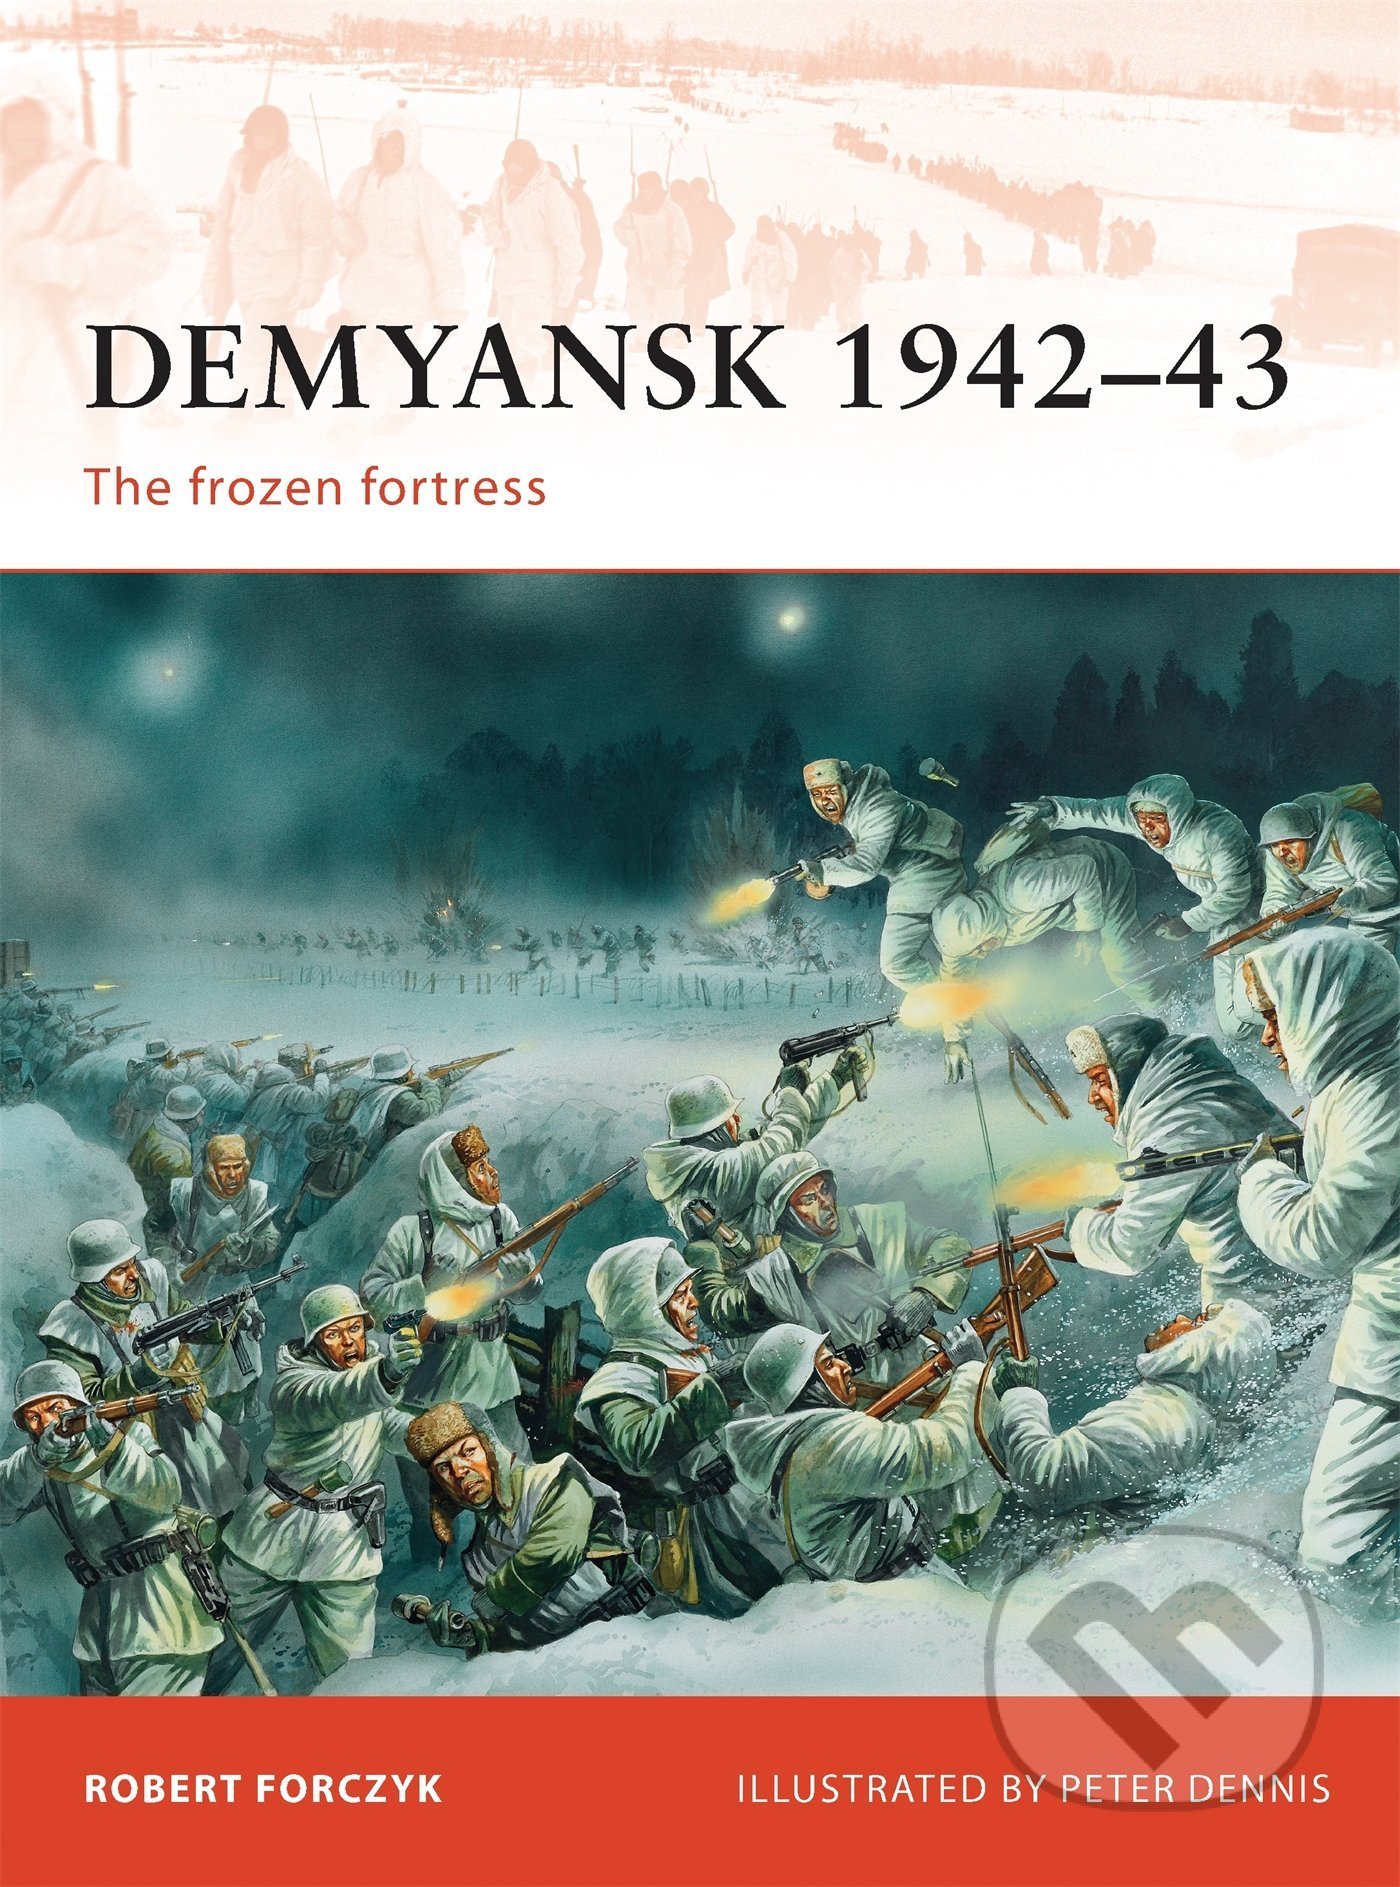 Demyansk 1942-43 - Robert Forczyk, Peter Dennis (ilustrátor), Osprey Publishing, 2012